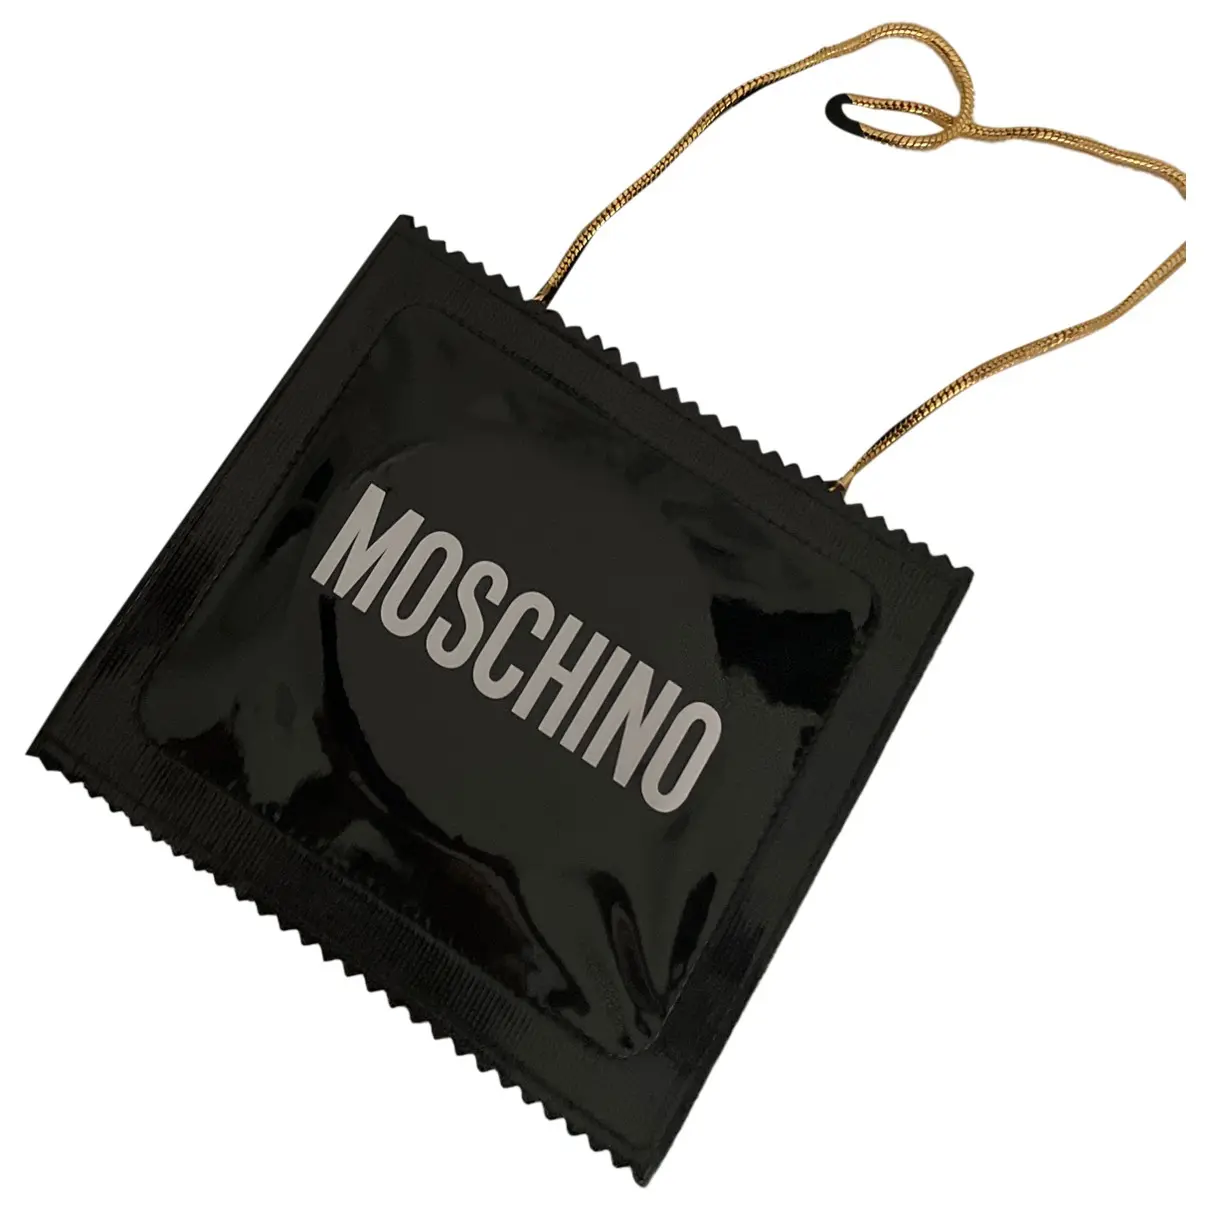 Patent leather handbag Moschino for H&M